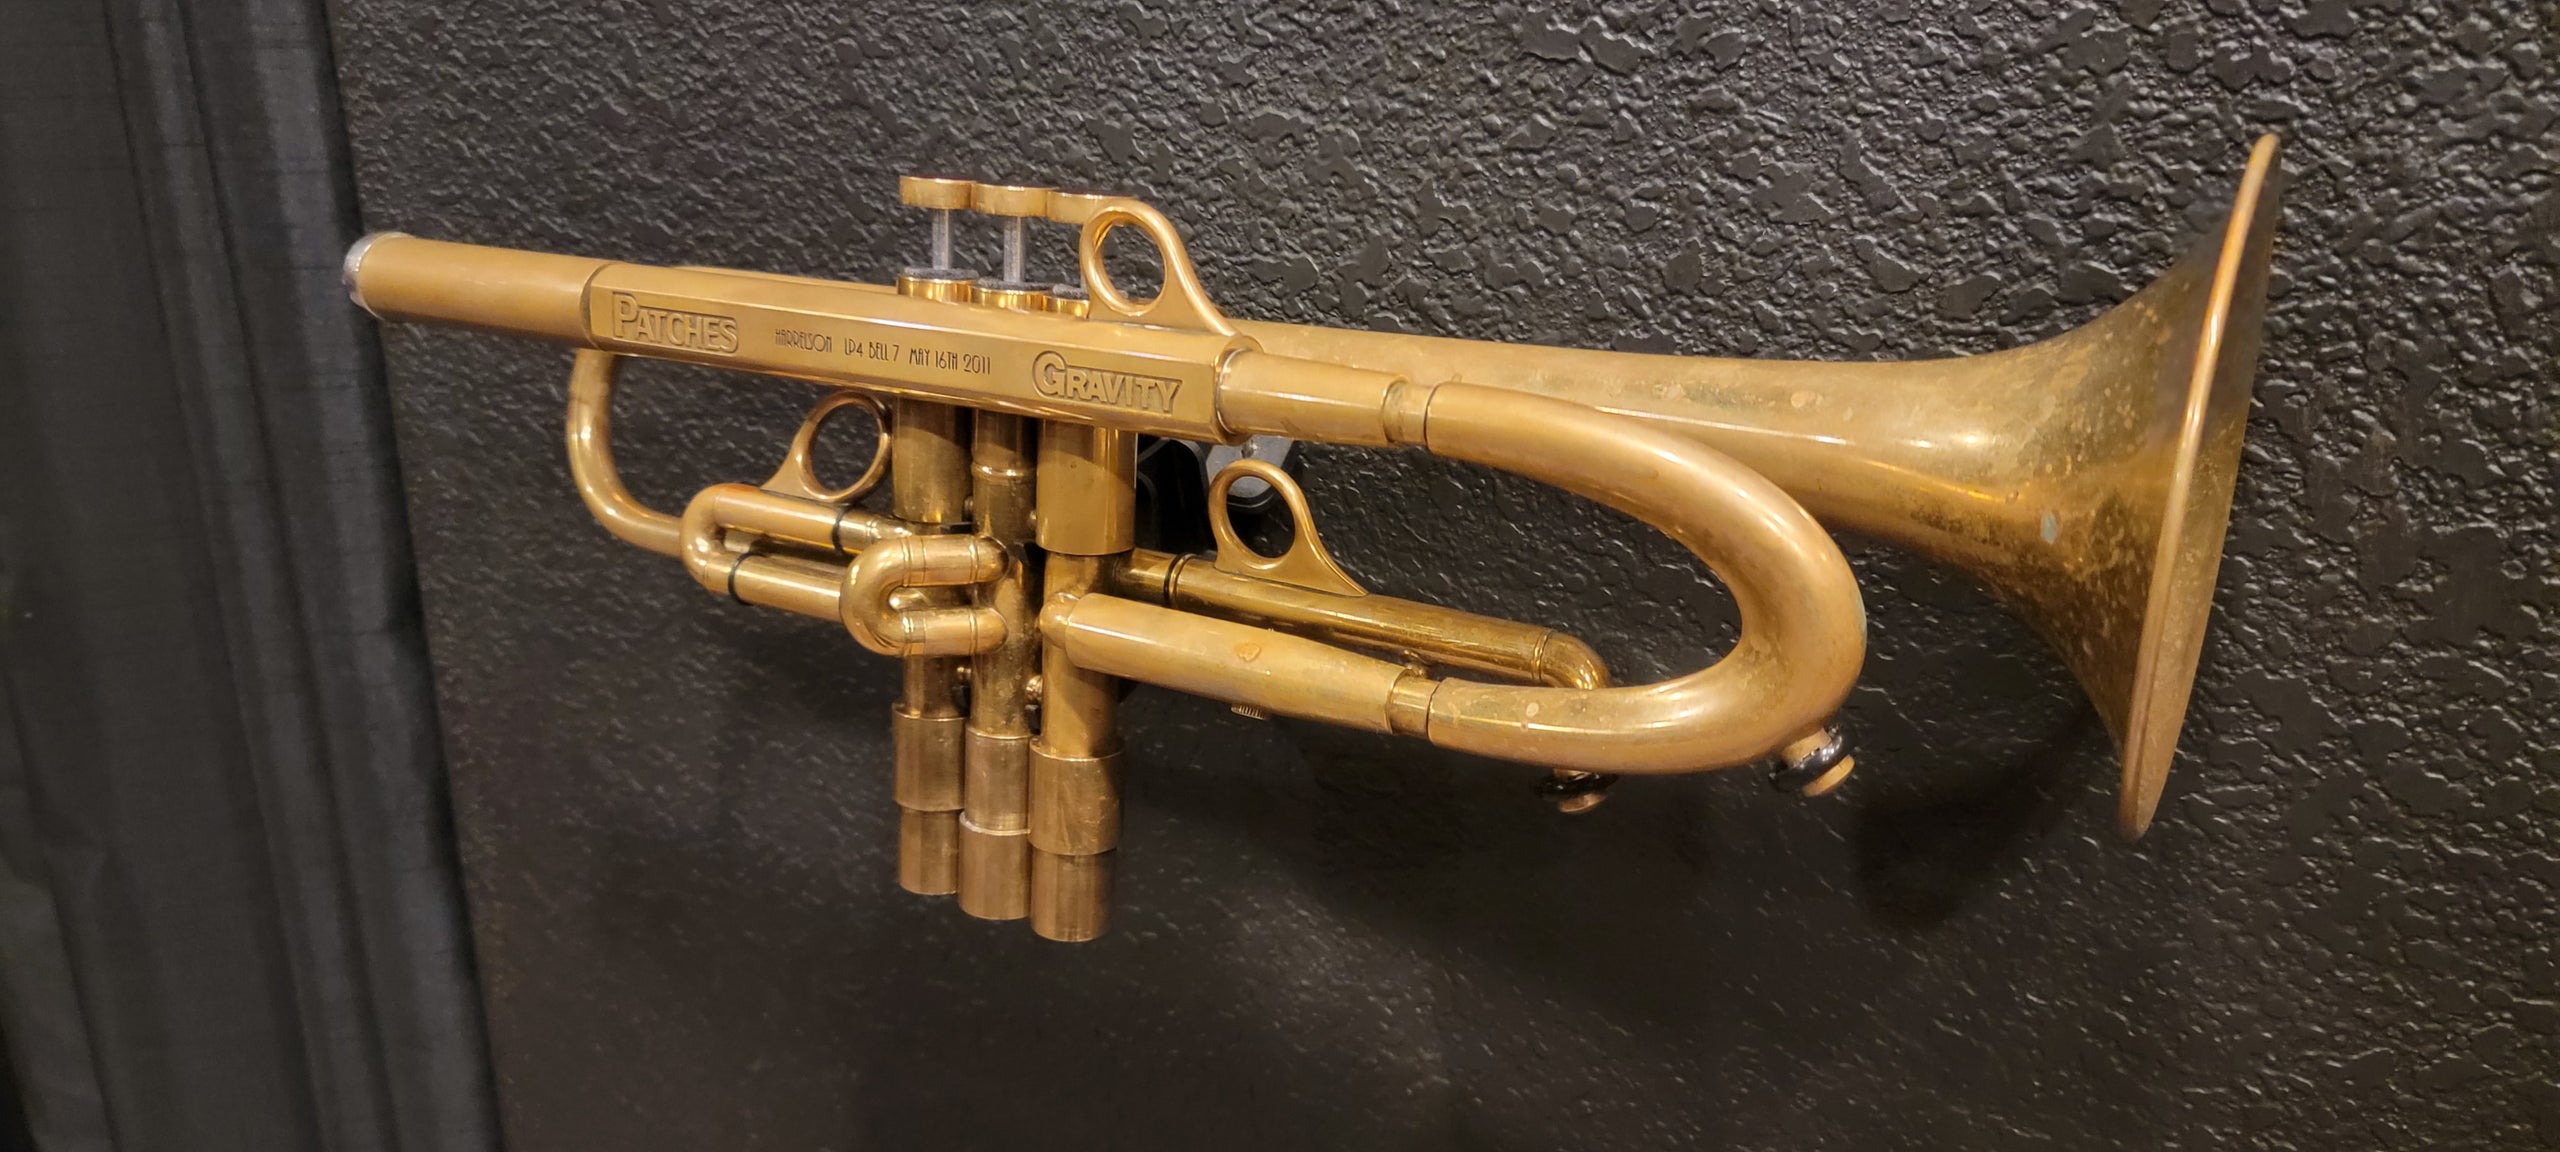 Gravity Trumpet w/Gravity Mouthpiece in raw brass